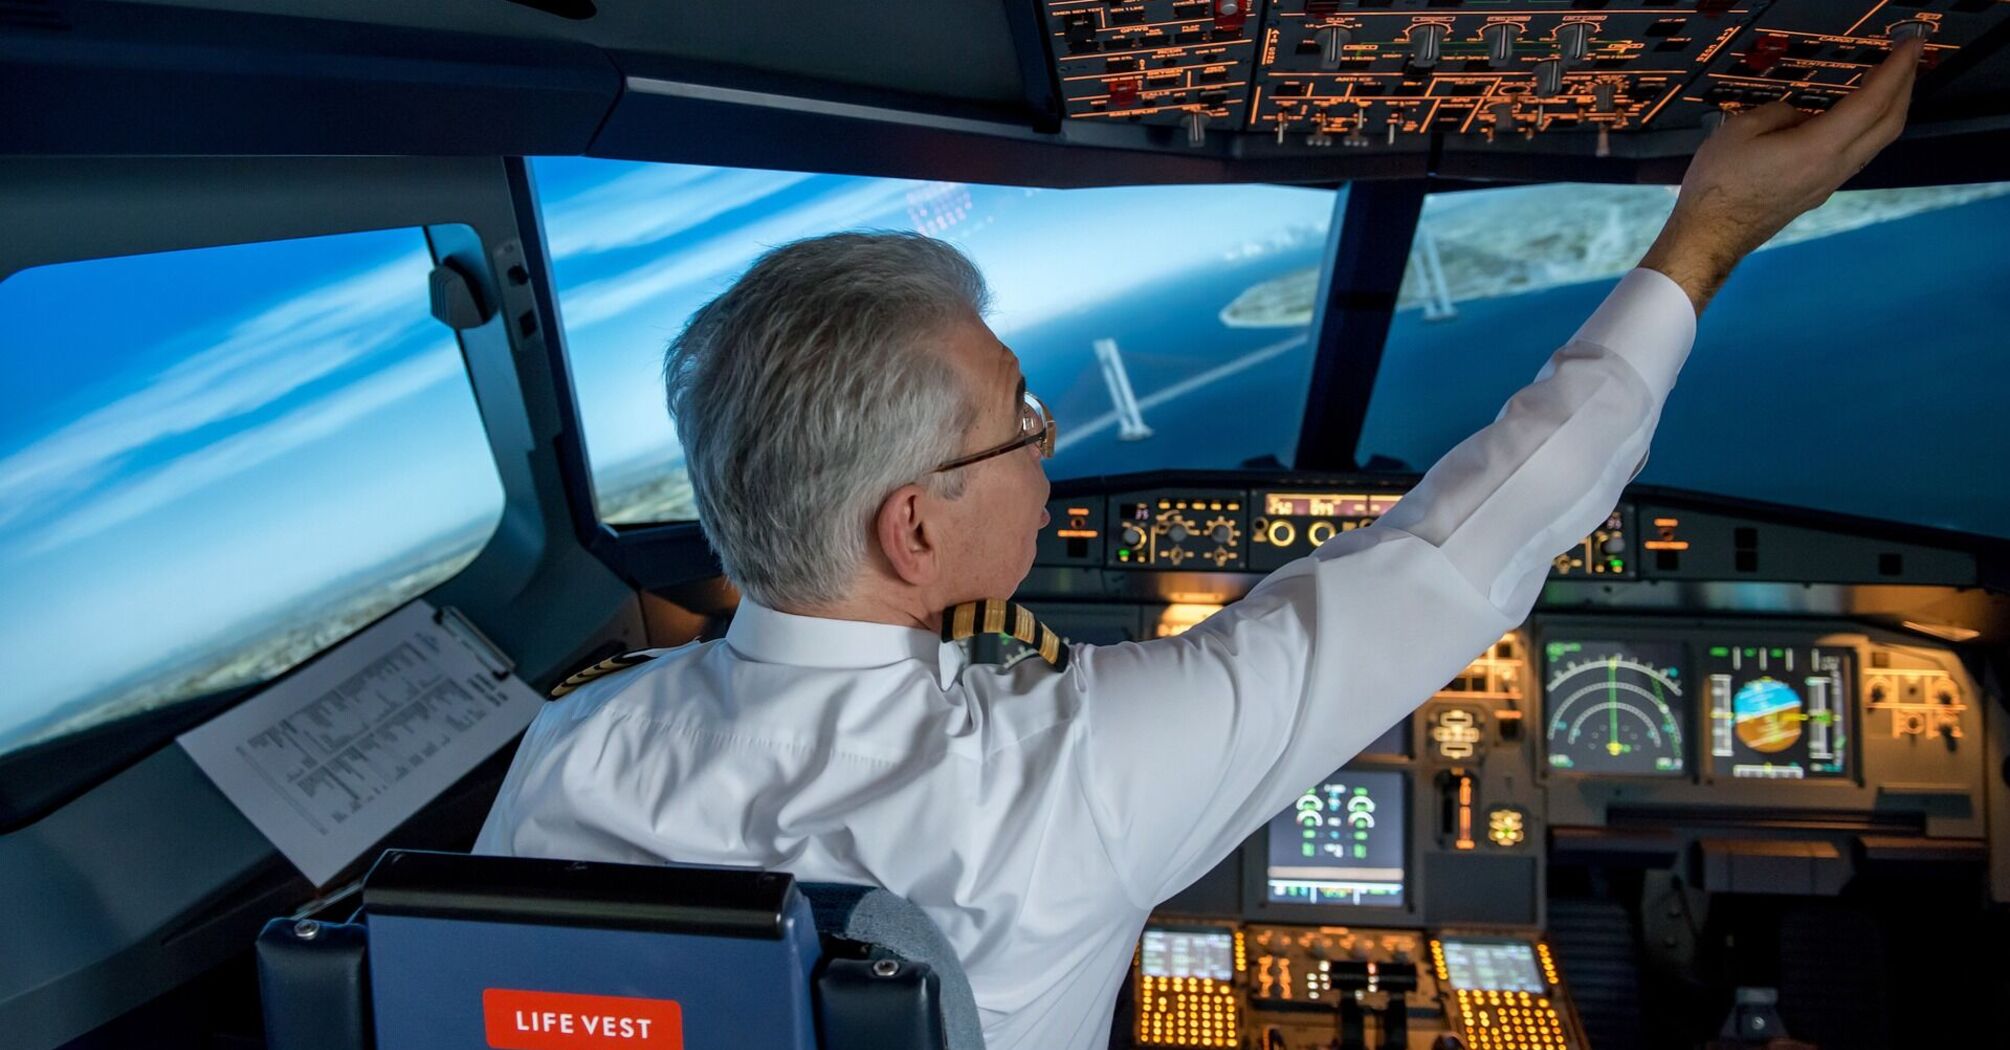 Pilot in uniform operating a flight simulator cockpit